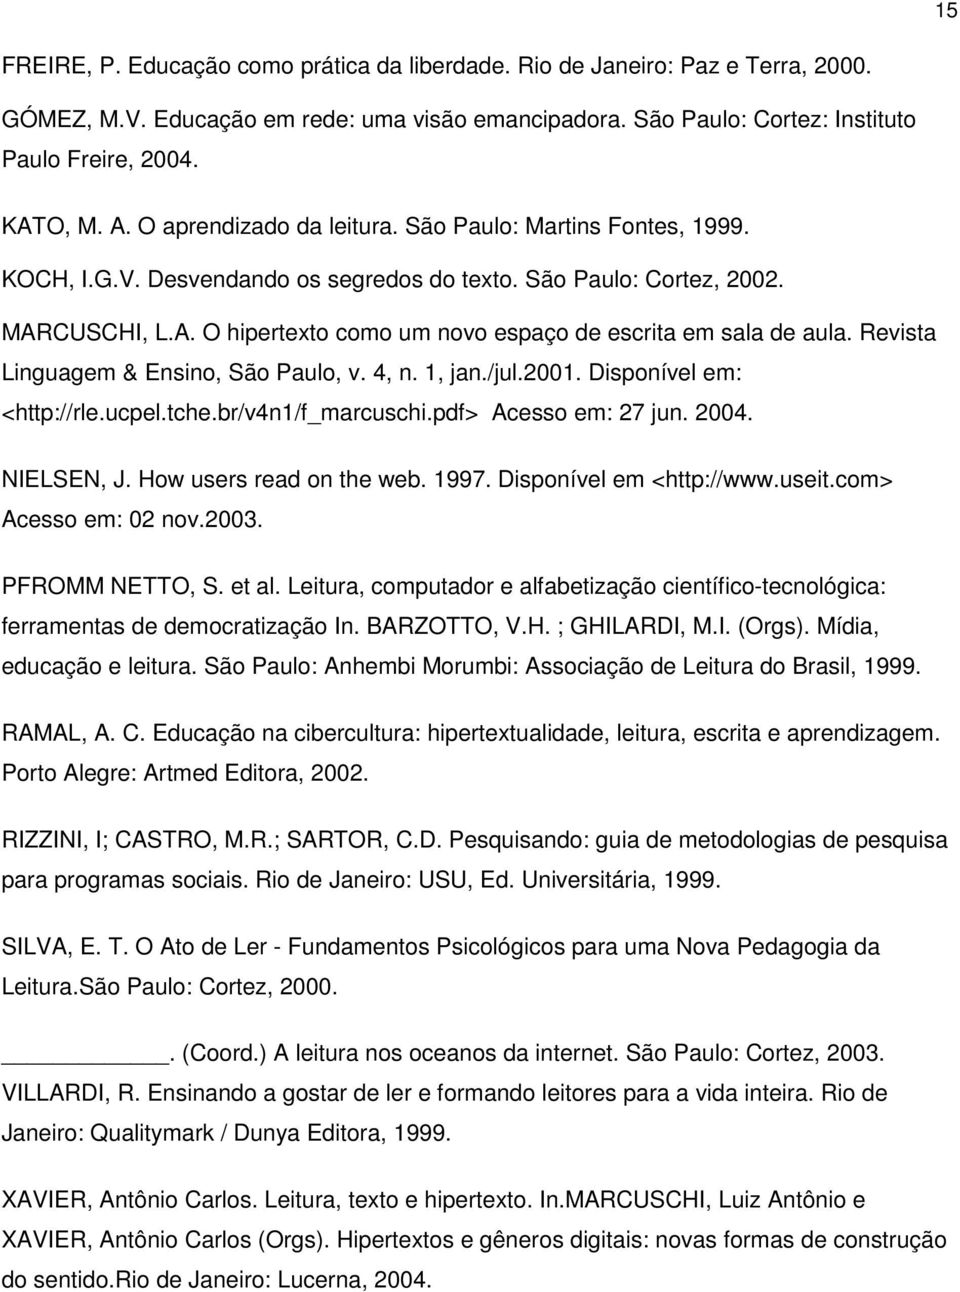 Revista Linguagem & Ensino, São Paulo, v. 4, n. 1, jan./jul.2001. Disponível em: <http://rle.ucpel.tche.br/v4n1/f_marcuschi.pdf> Acesso em: 27 jun. 2004. NIELSEN, J. How users read on the web. 1997.